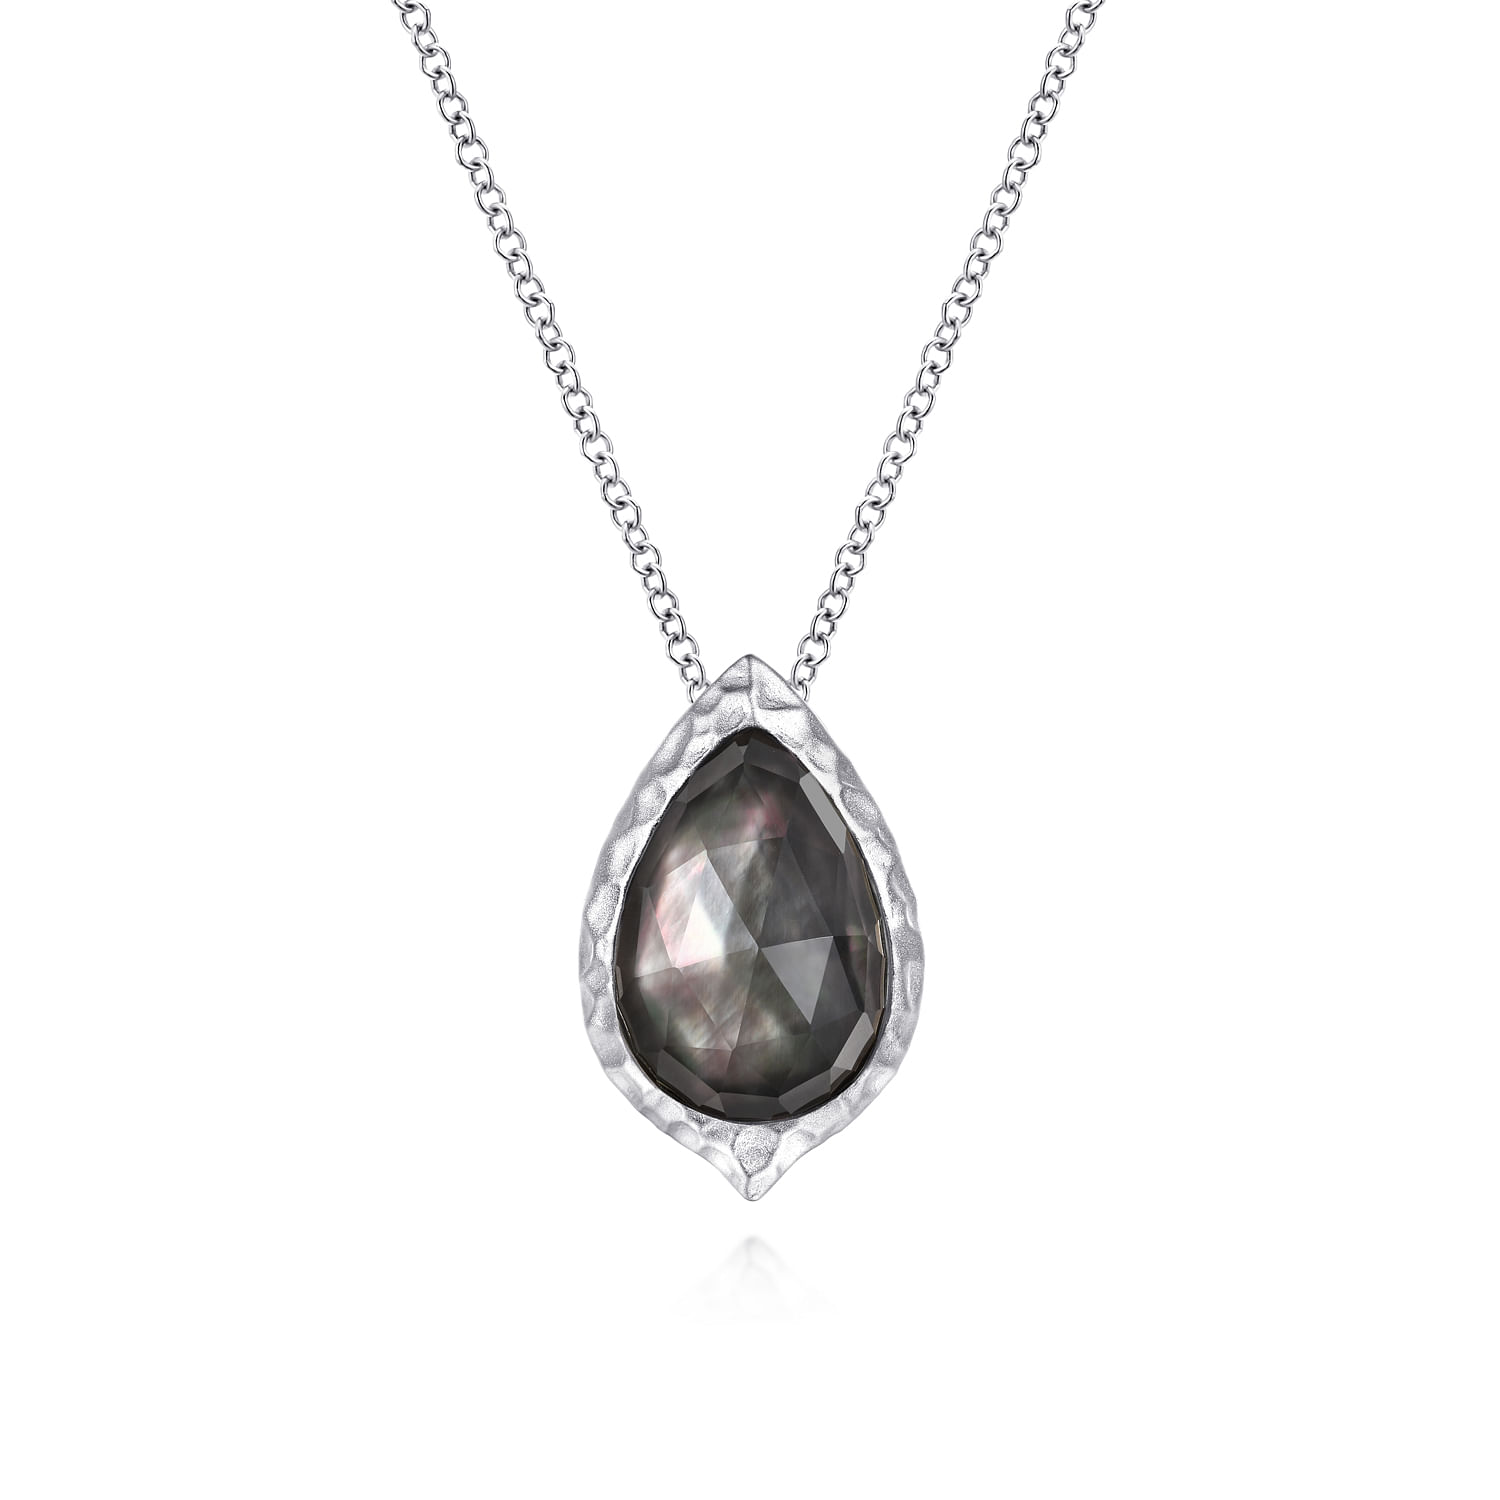 Gabriel - 925 Sterling Silver Hammered Pear Shaped Rock Crystal/Black MOP Pendant Necklace